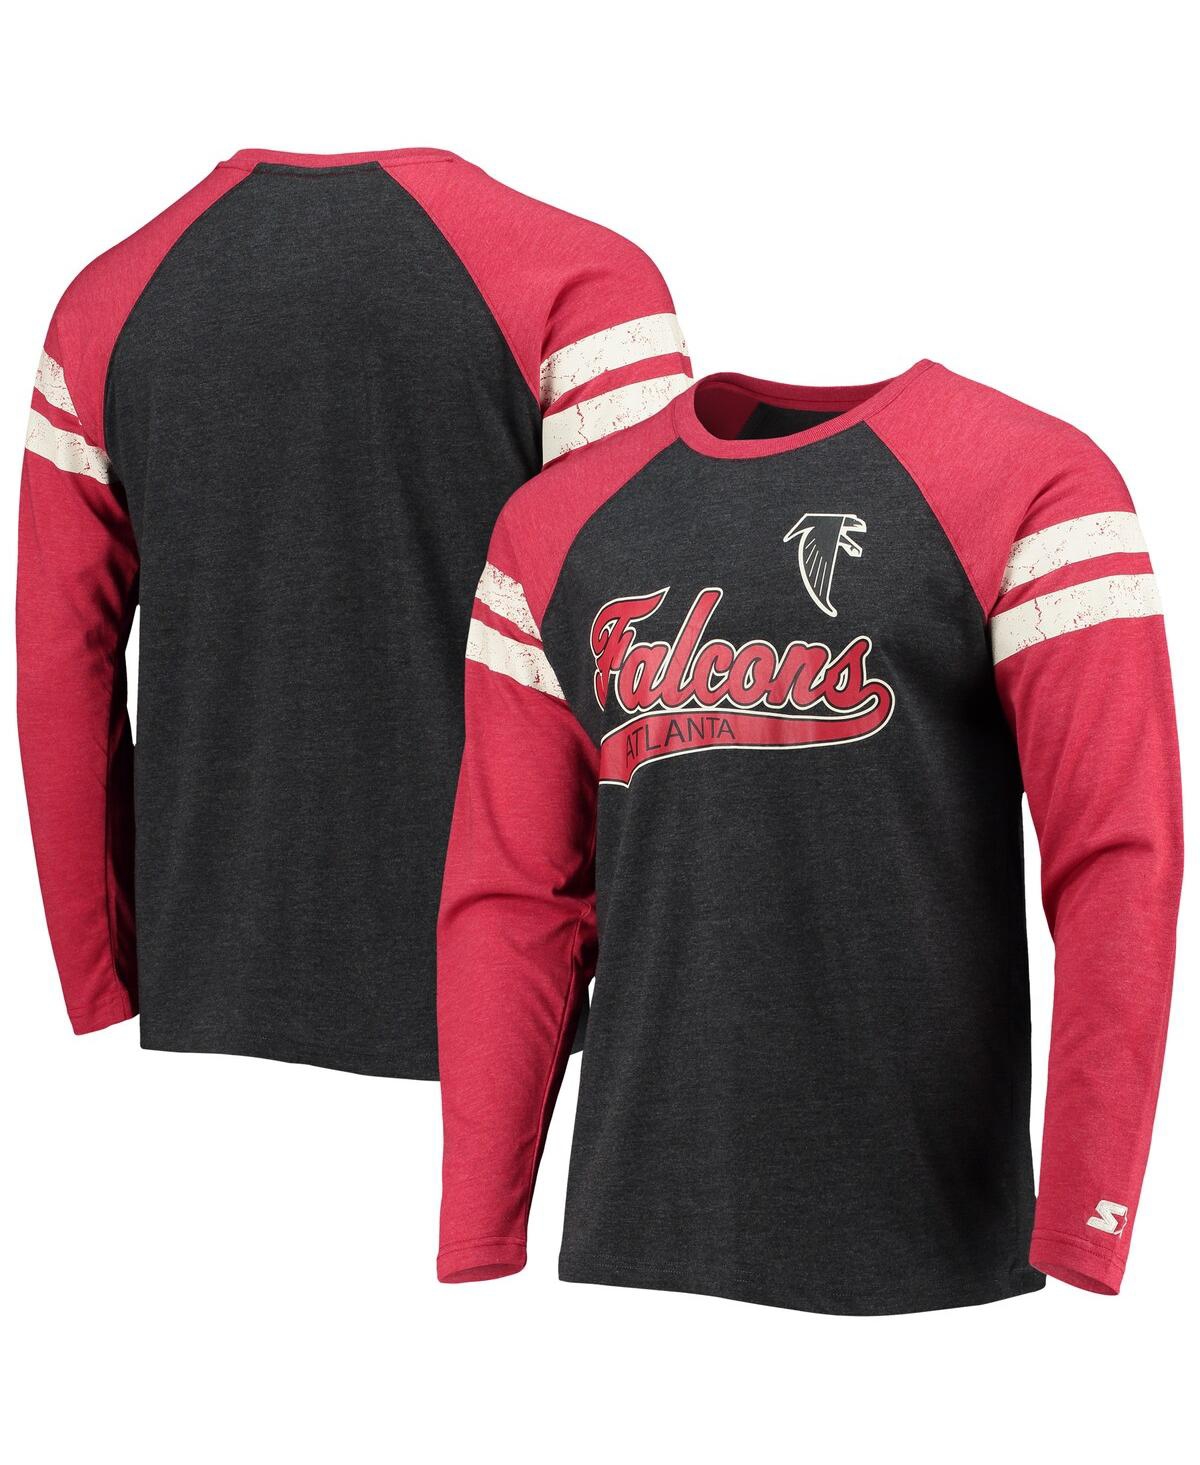 Men's Starter Black, Red Atlanta Falcons Throwback League Raglan Long Sleeve Tri-Blend T-shirt - Black, Red